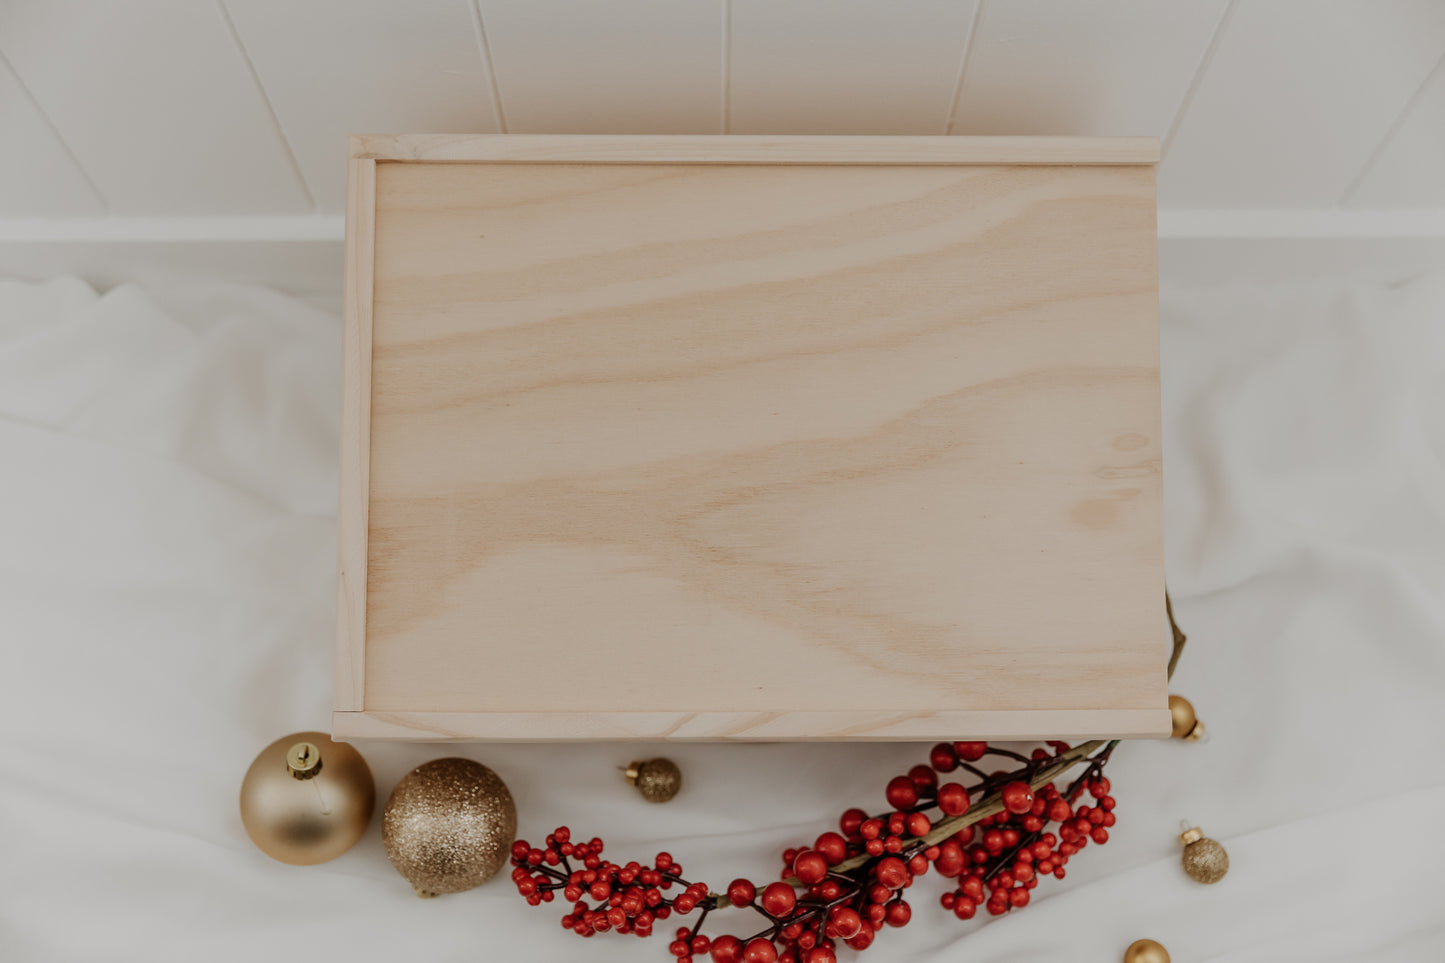 Christmas Eve Box - Personalised